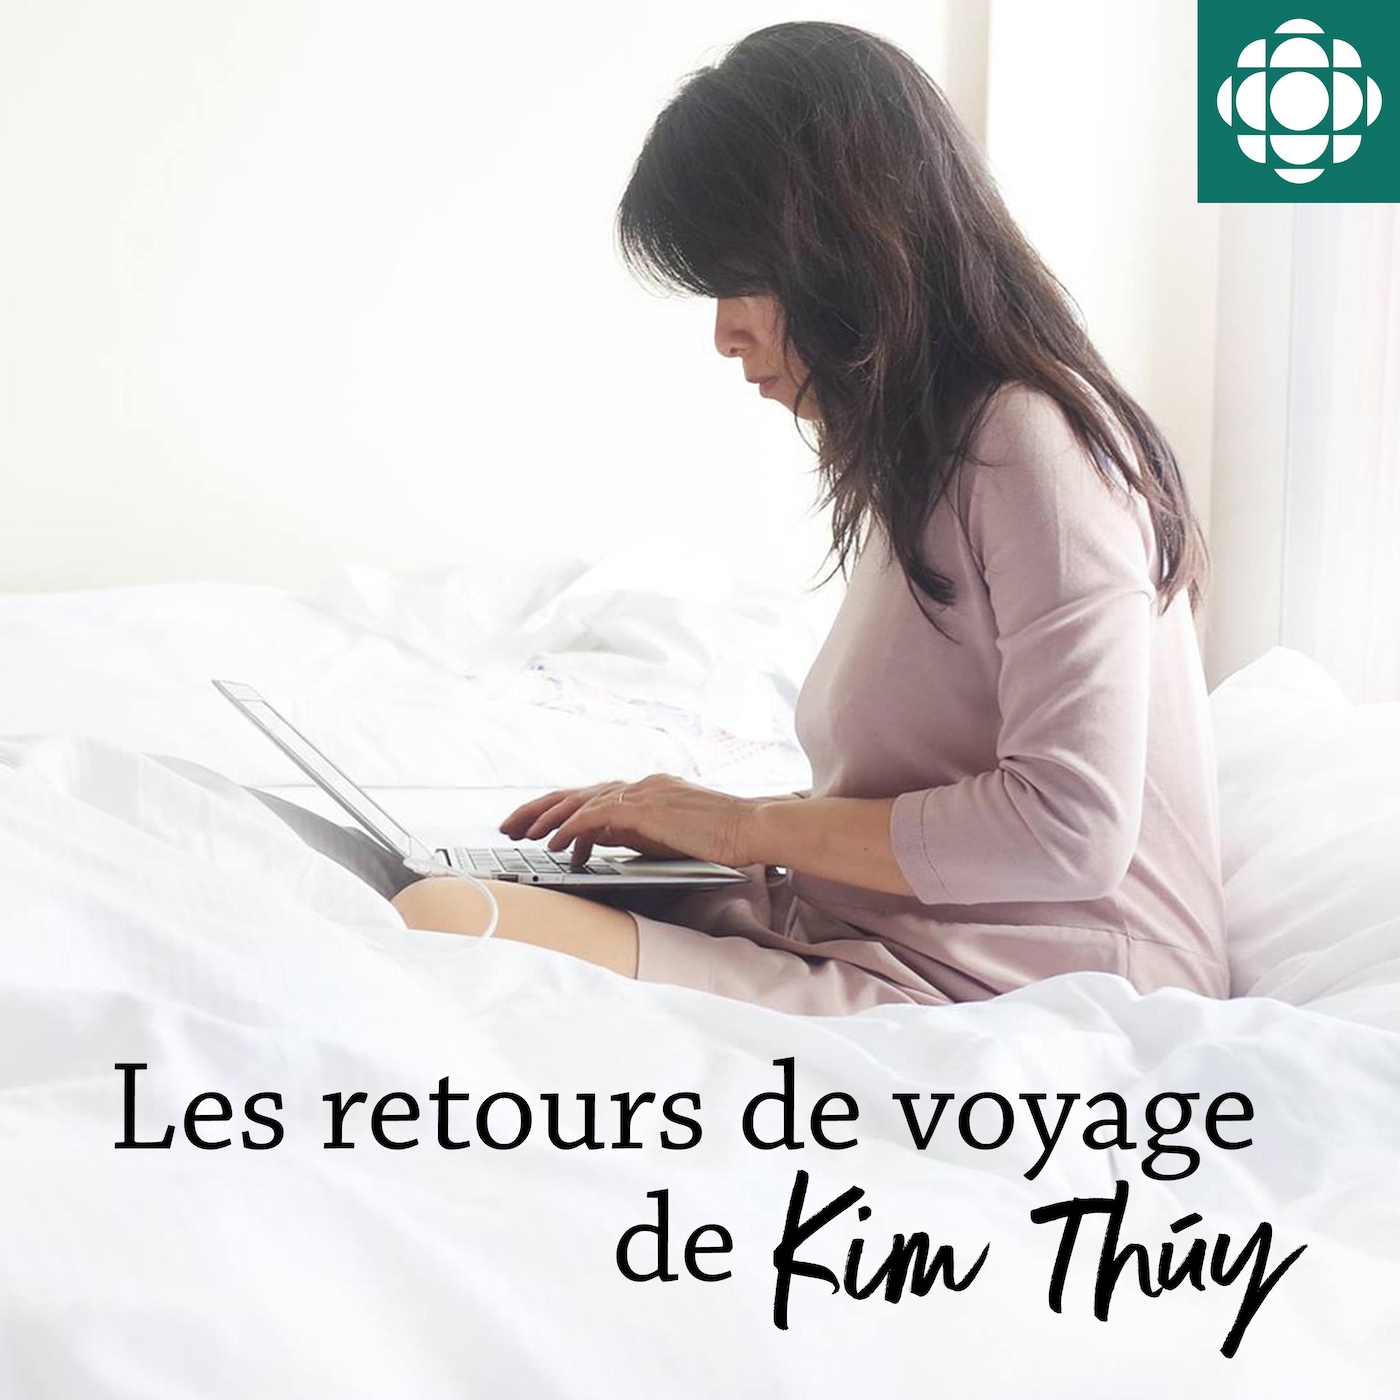 Les retours de voyage de Kim Thúy